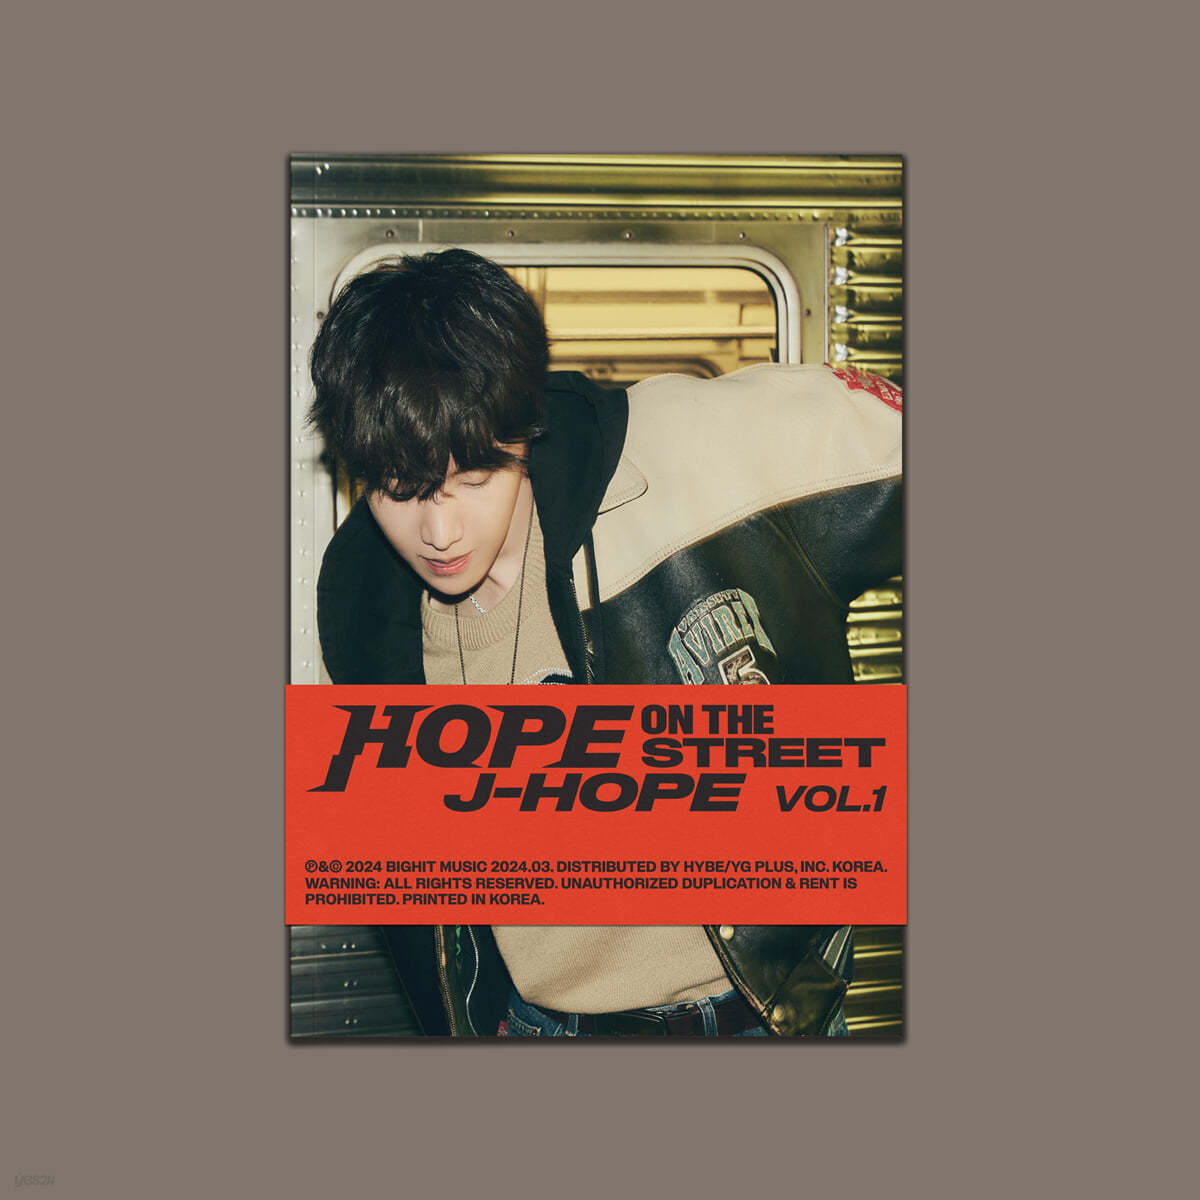 j-hope – HOPE ON THE STREET VOL.1 (Weverse Albums Ver.)